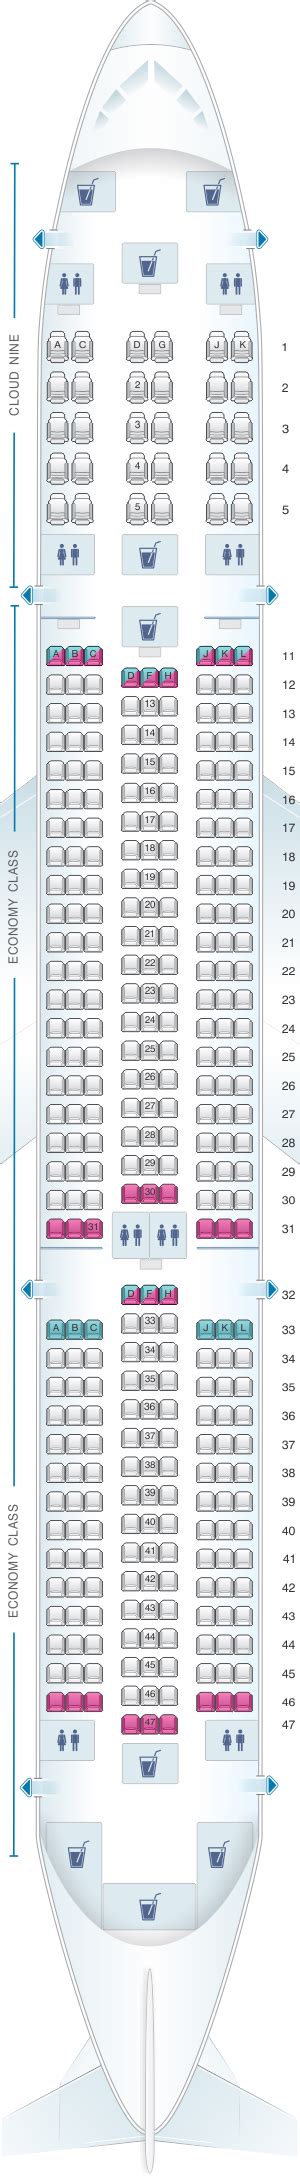 Delta A350 900 Seat Map Elcho Table